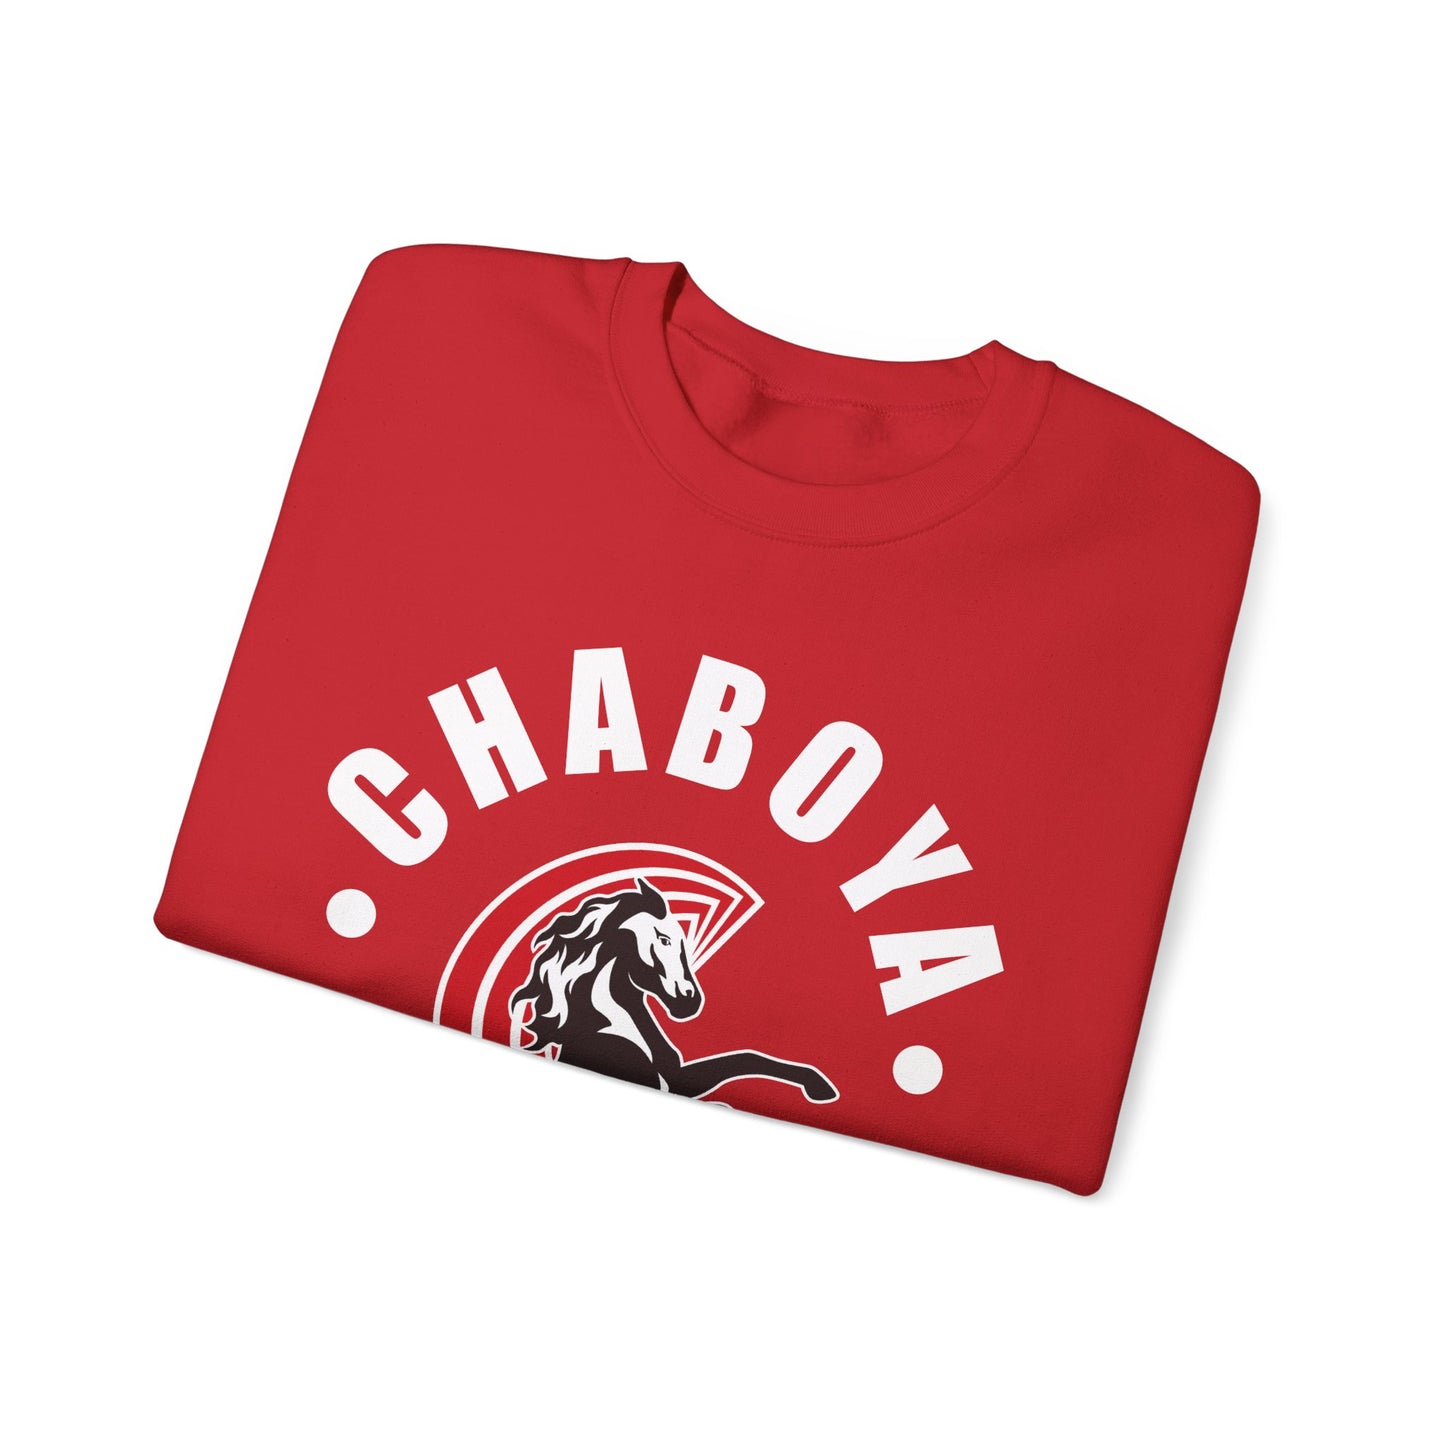 Chaboya Middle School Mascot Crewneck - Adult